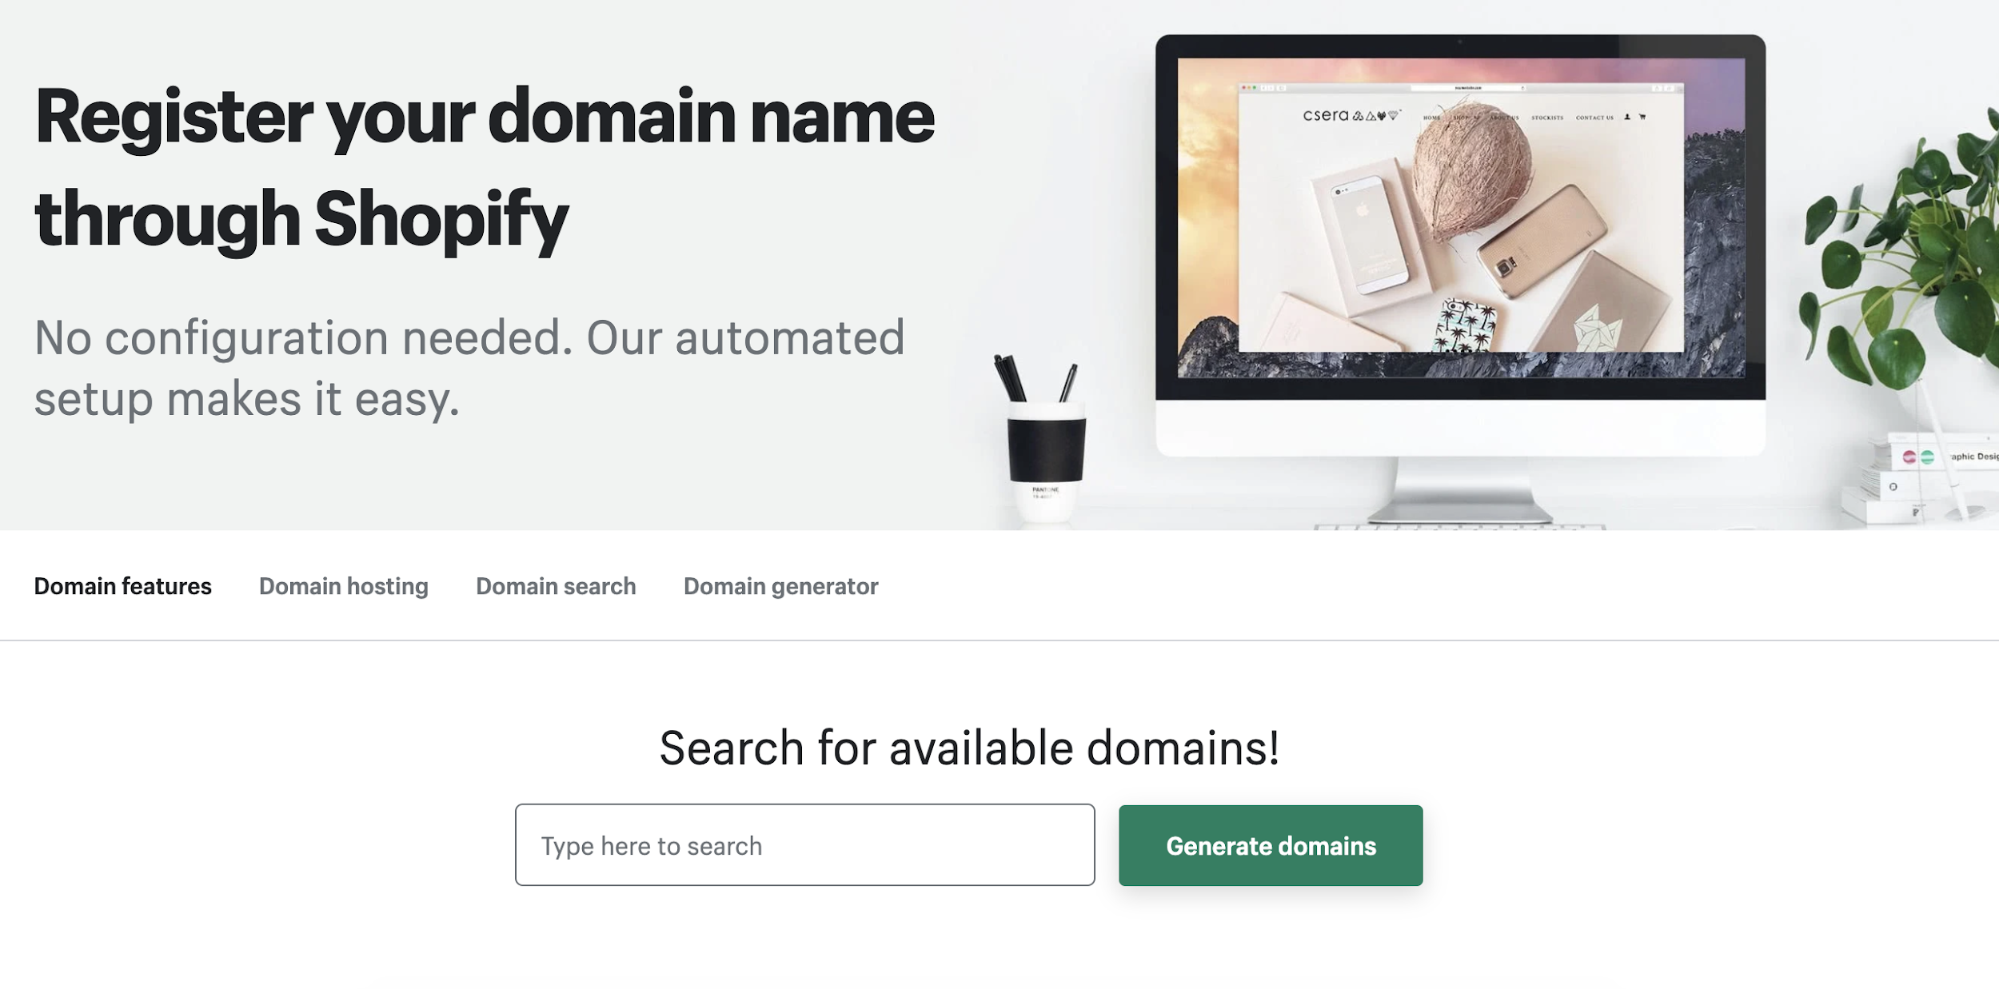 Screenshot of the Shopify domain registrar tool